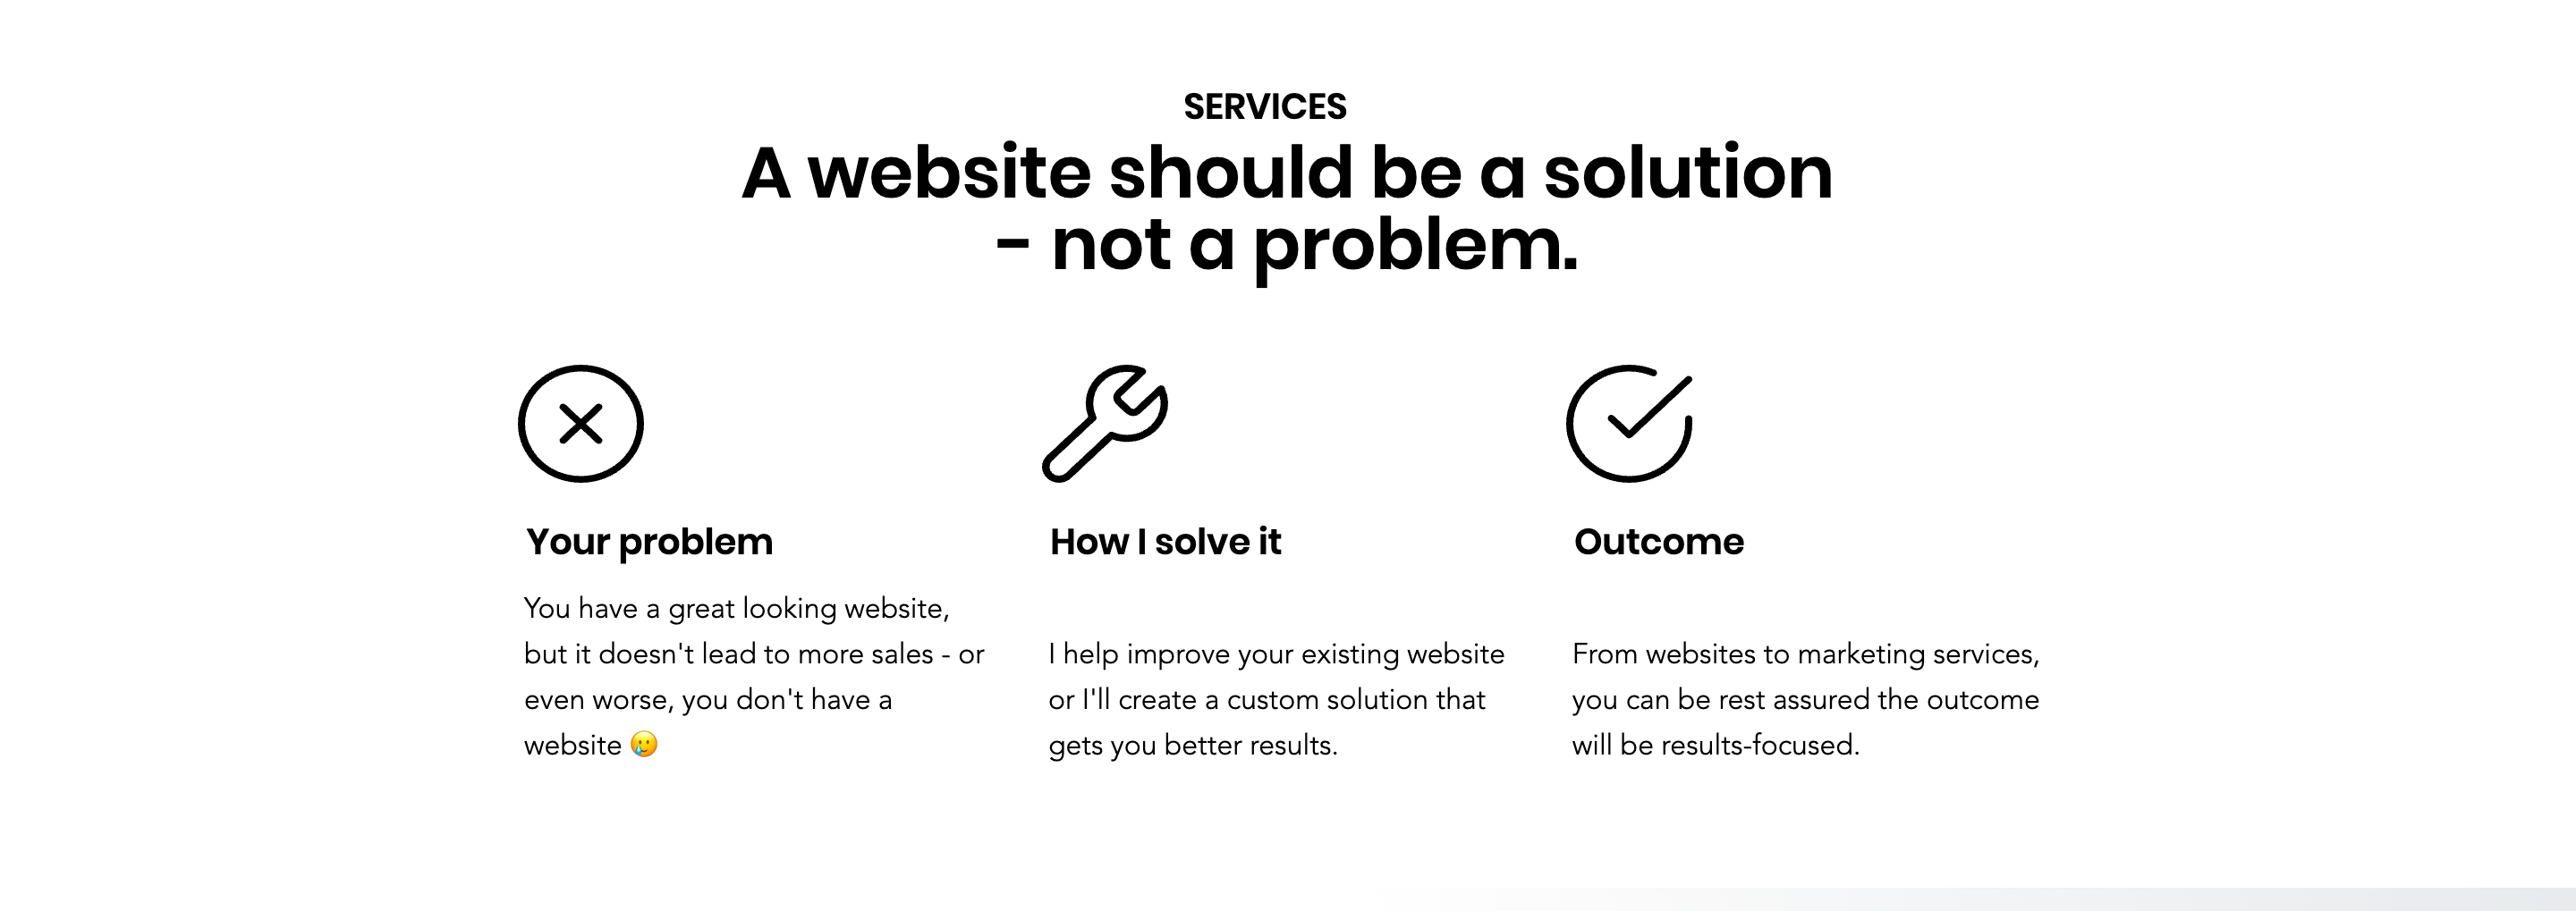 portfolio-website-services